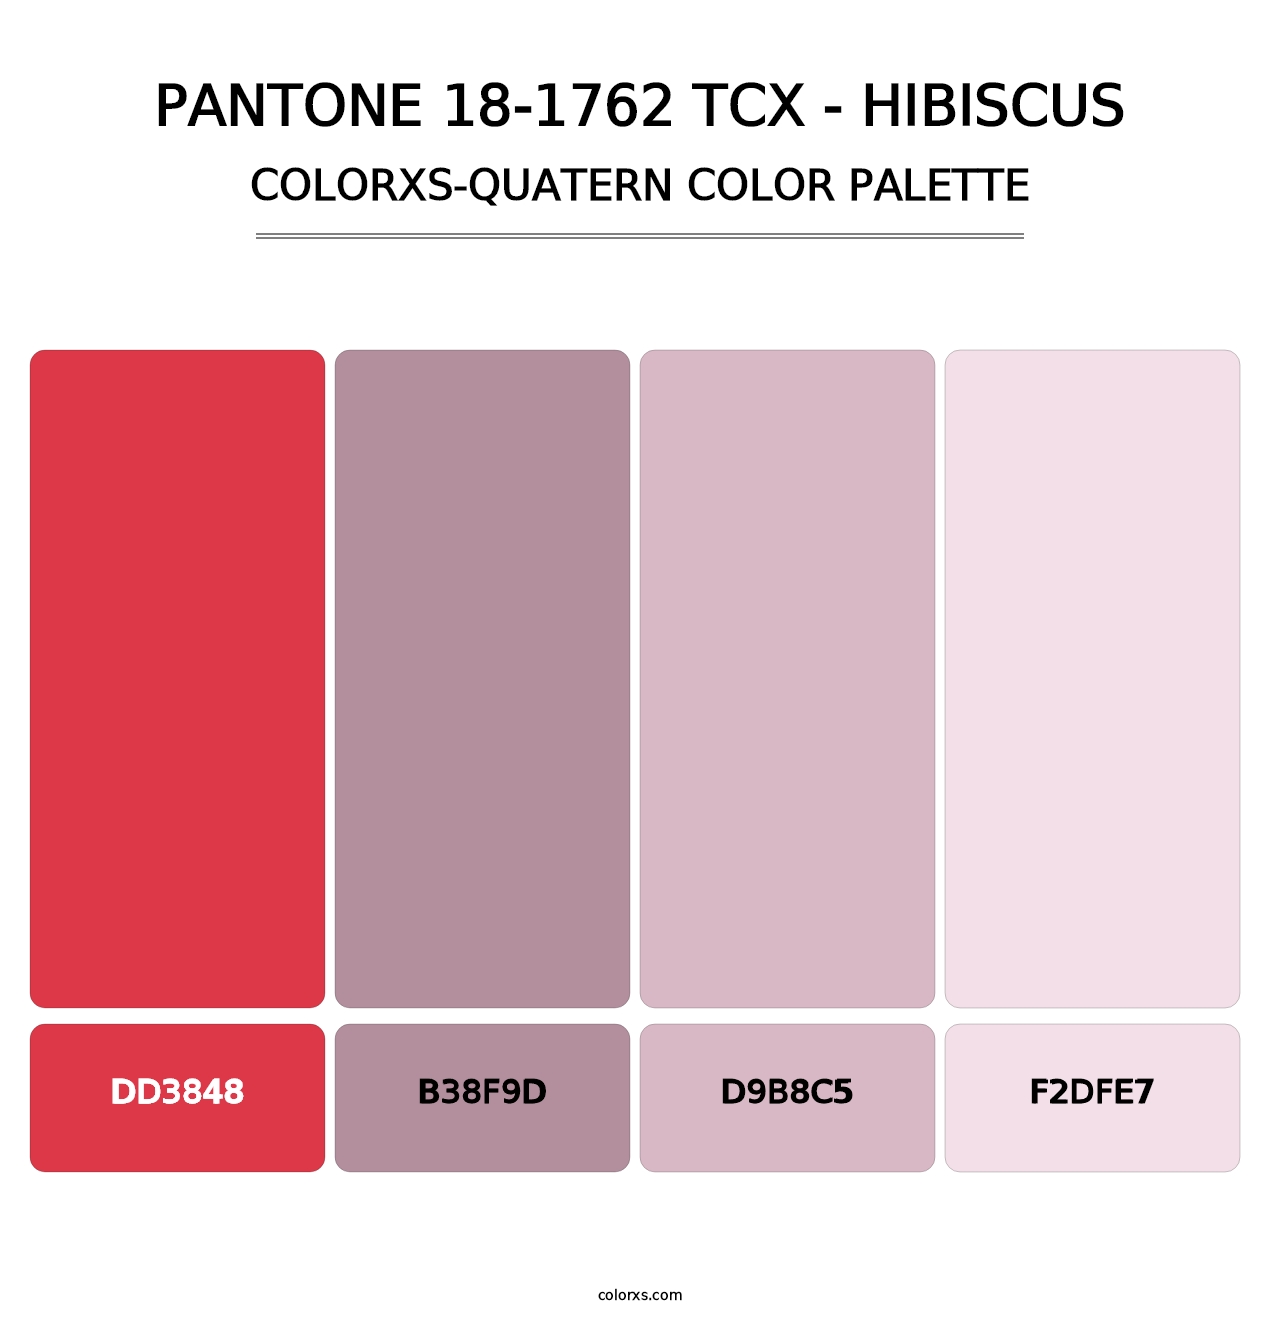 PANTONE 18-1762 TCX - Hibiscus - Colorxs Quatern Palette